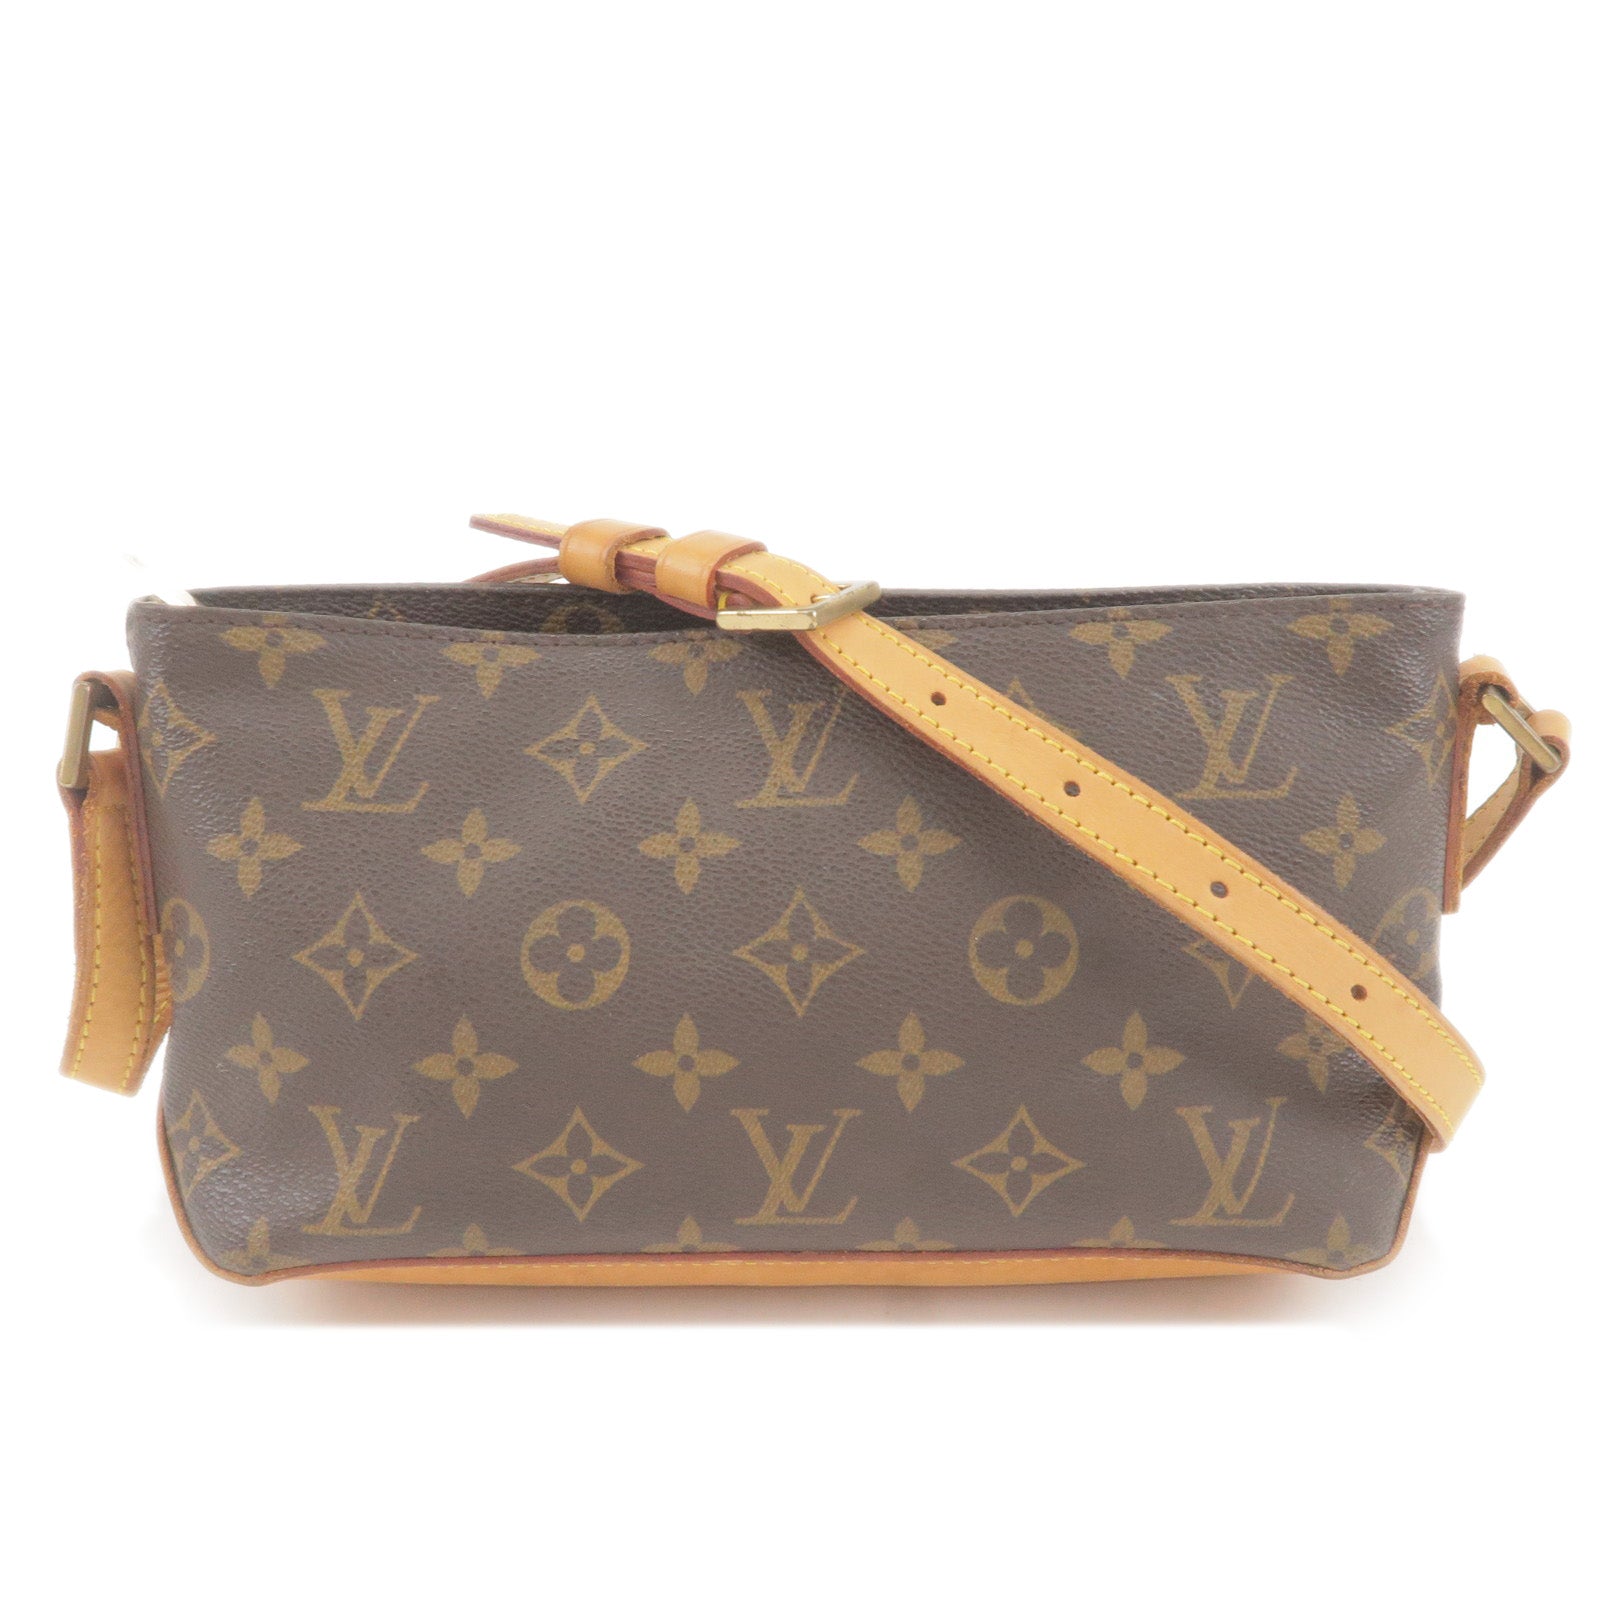 Louis Vuitton handbag in beige monogram canvas Idylle and brown